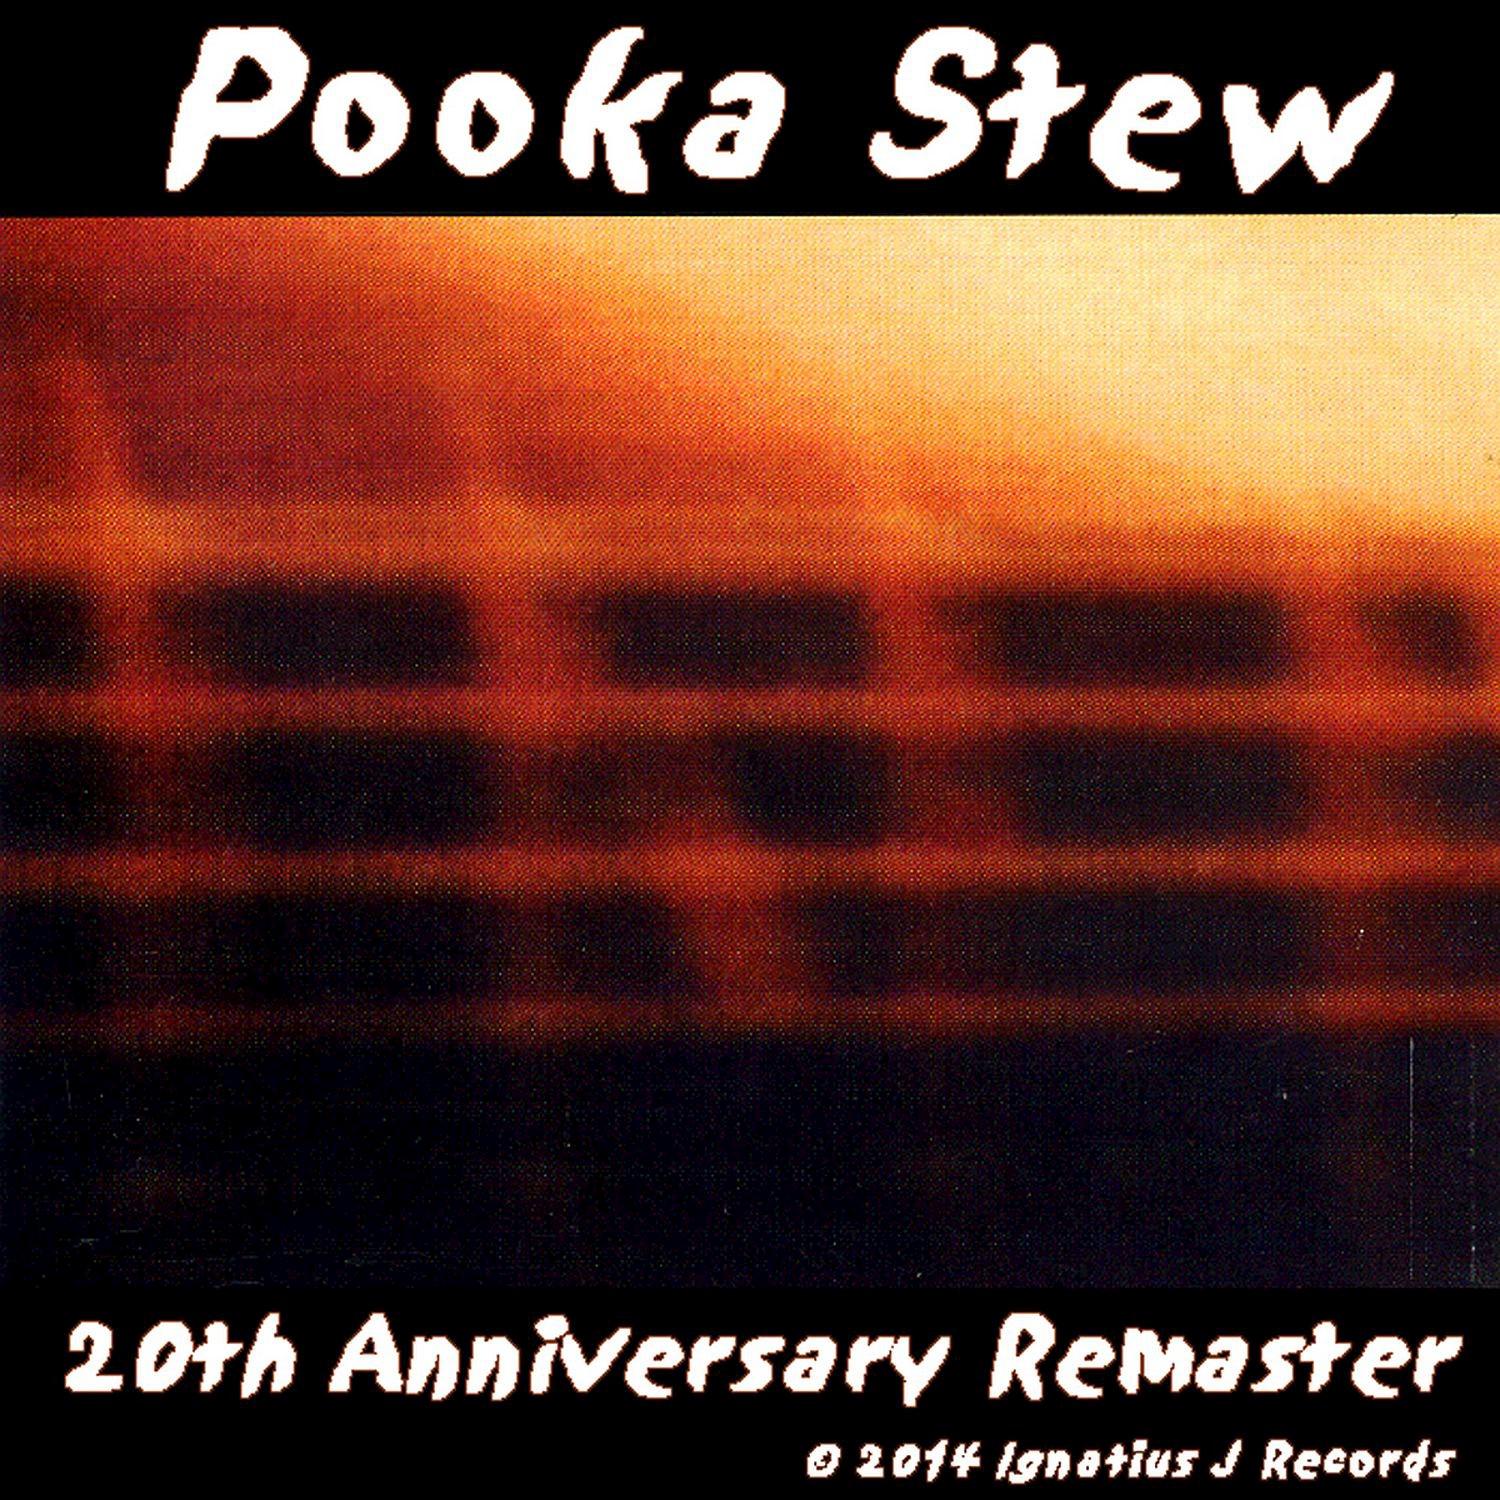 Pooka Stew - 20th Anniversary Remaster